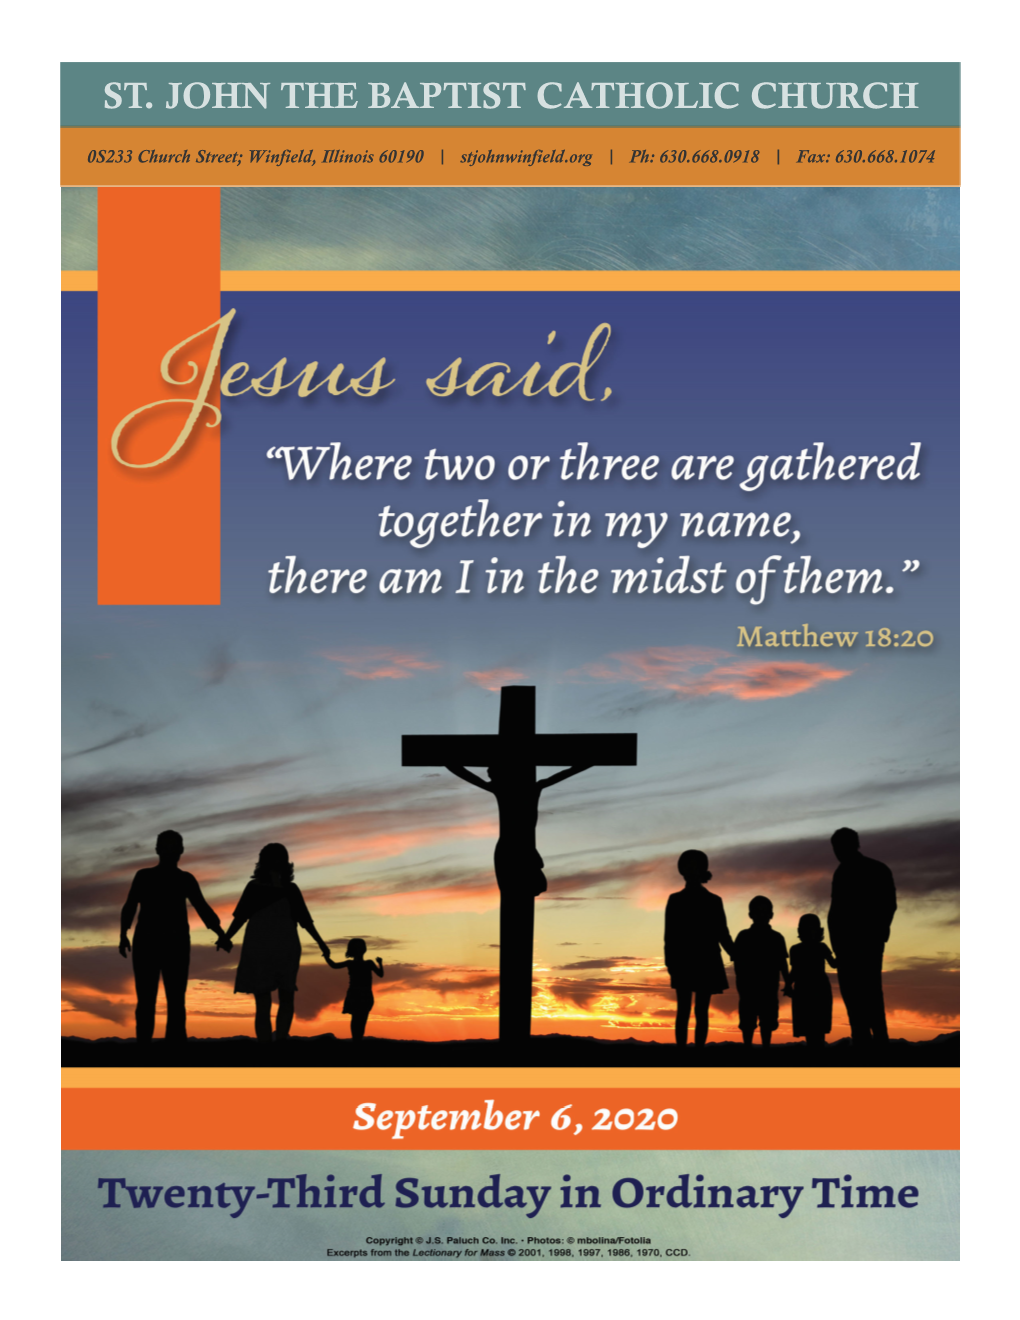 September 6, 2020, Twenty-Third Sunday in Ordinary Time